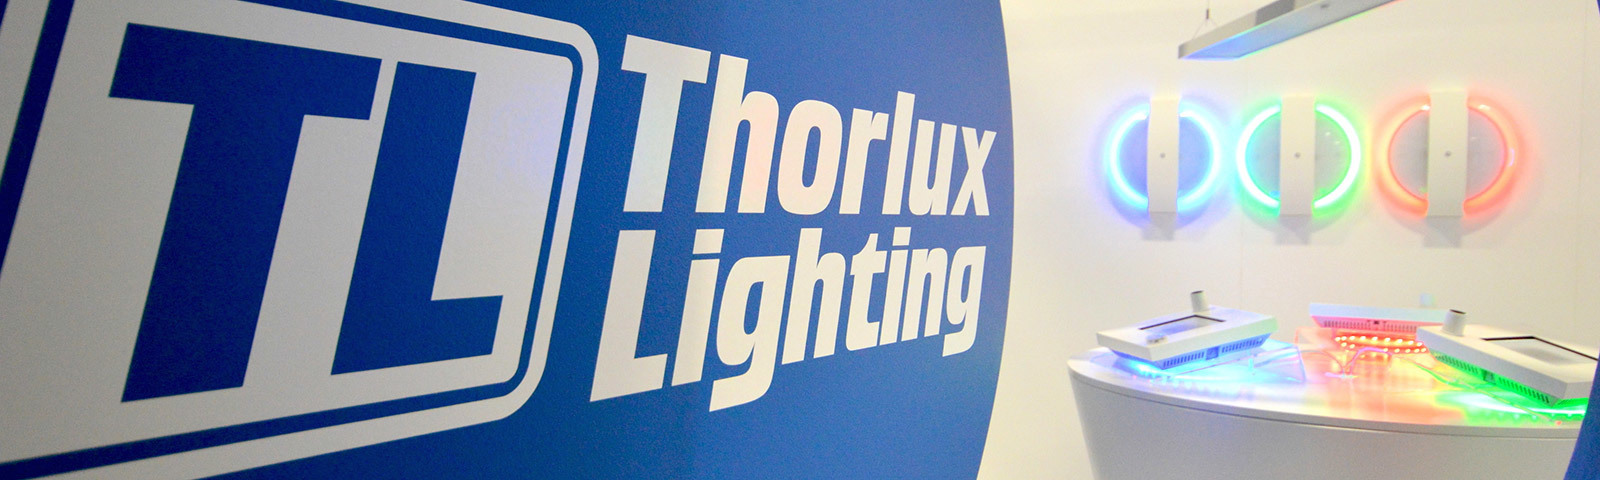 Thorlux Lighting exhibited at Sparc 2015 in Sydney, Australia